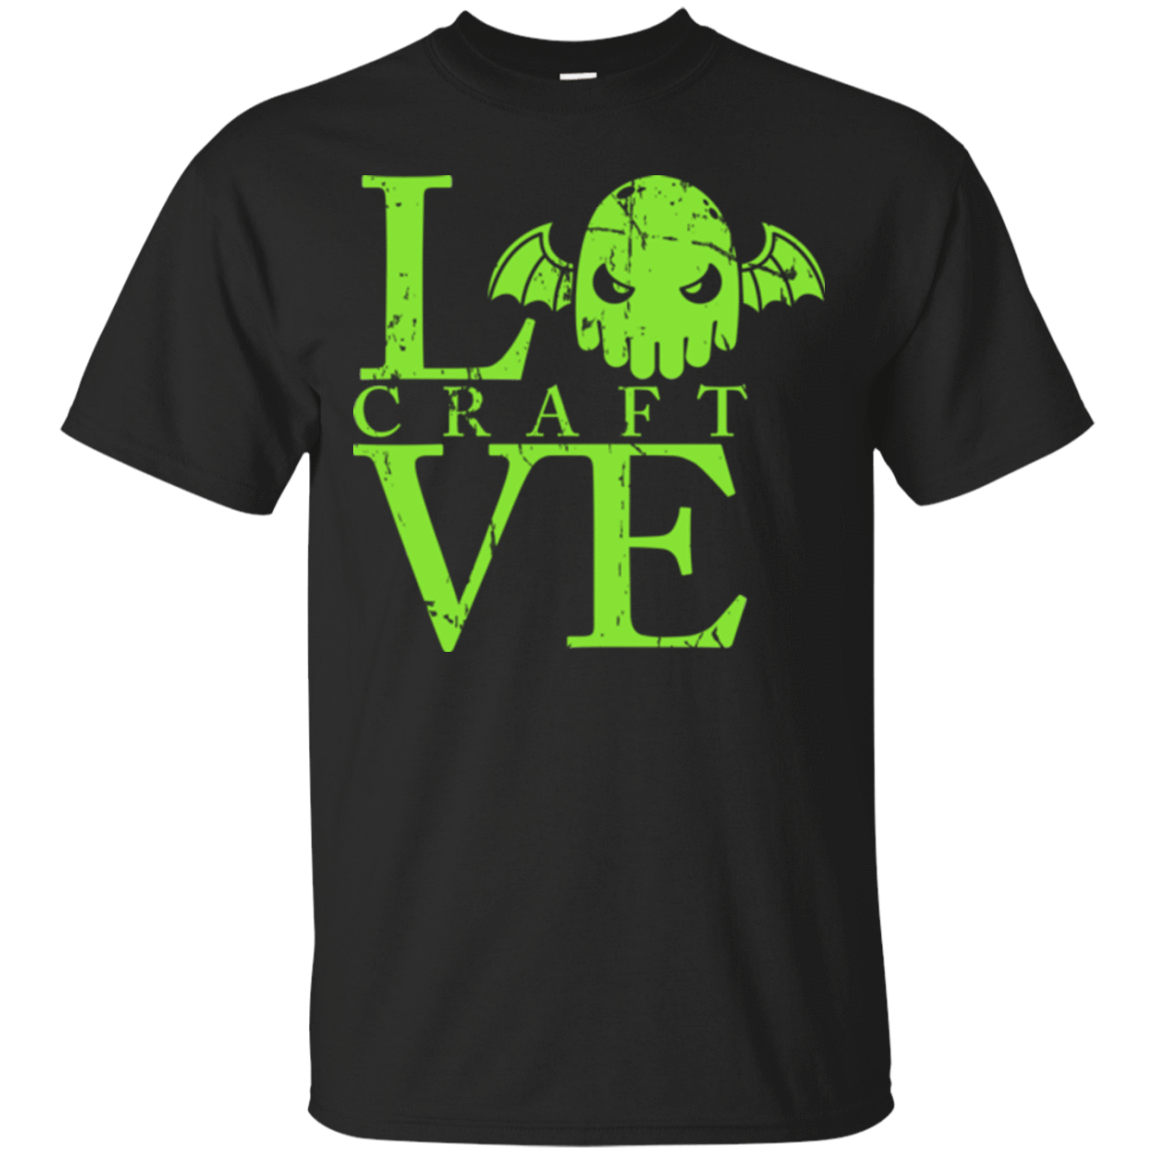 T-Shirts Black / Small Love craft T-Shirt